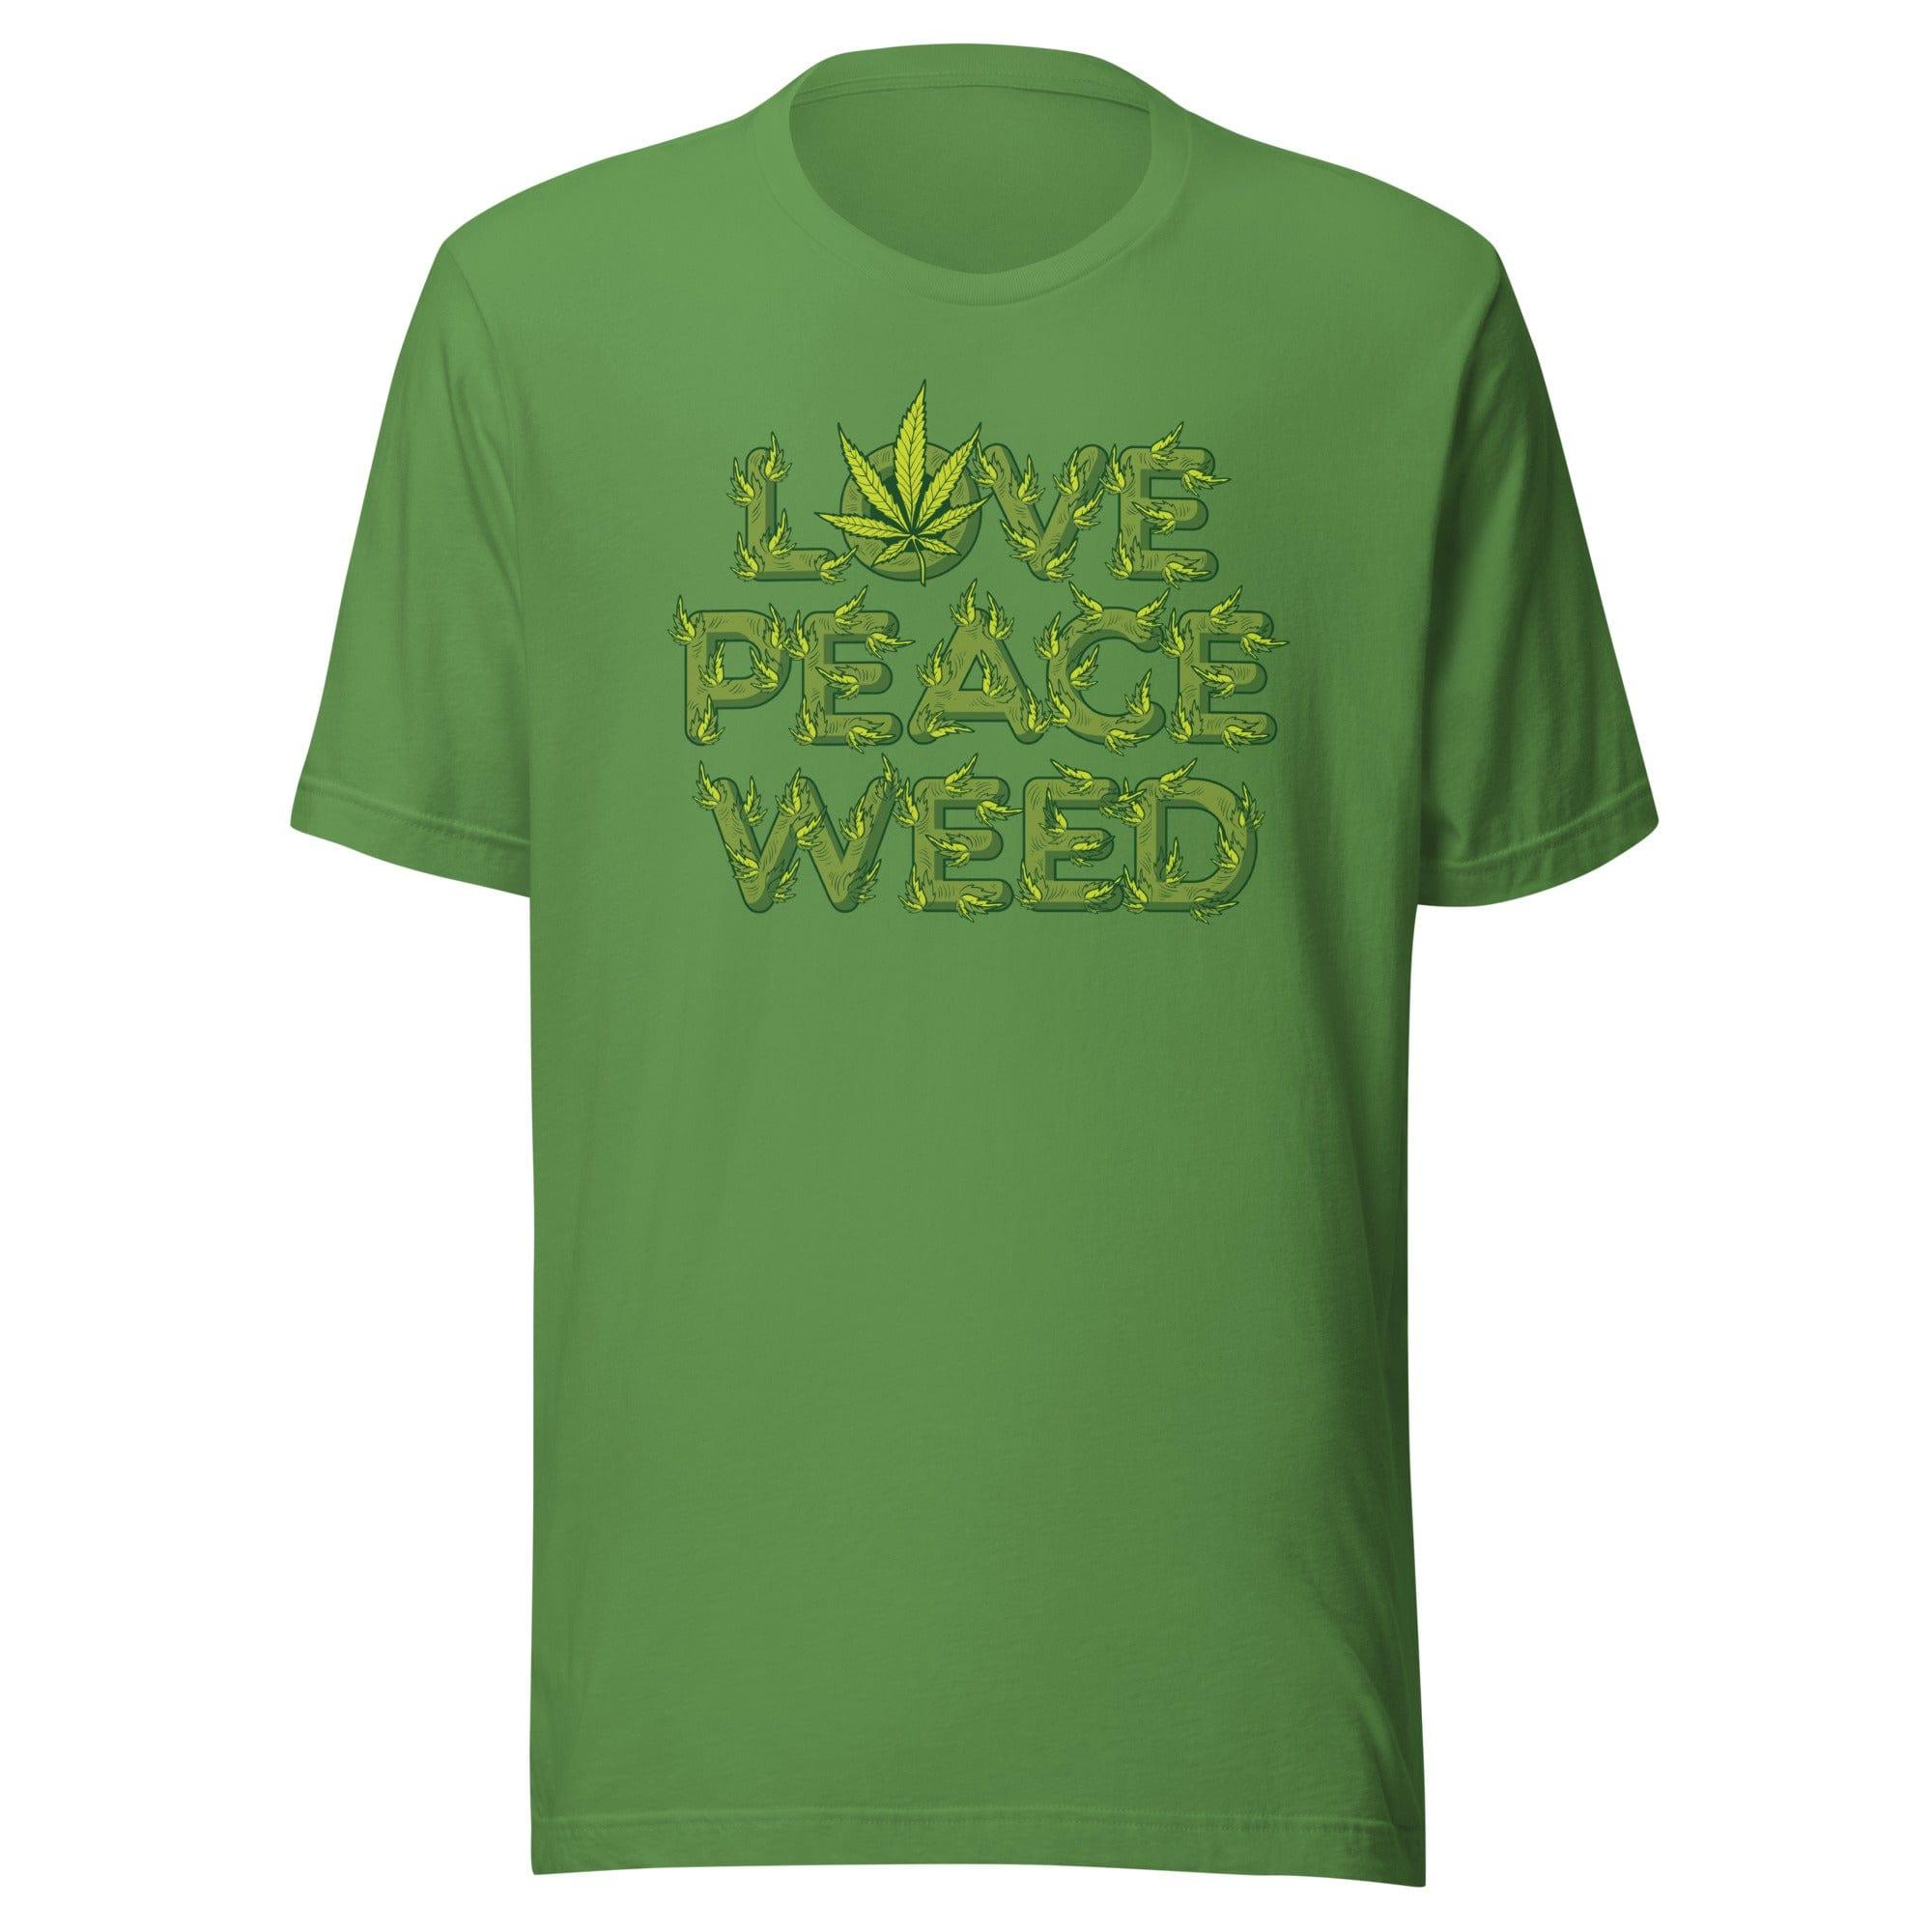 Marijuana T-shirt Love Peace Weed in Marijuana Leaves Short Sleeve Unisex top_ Top Koala Tee - TopKoalaTee